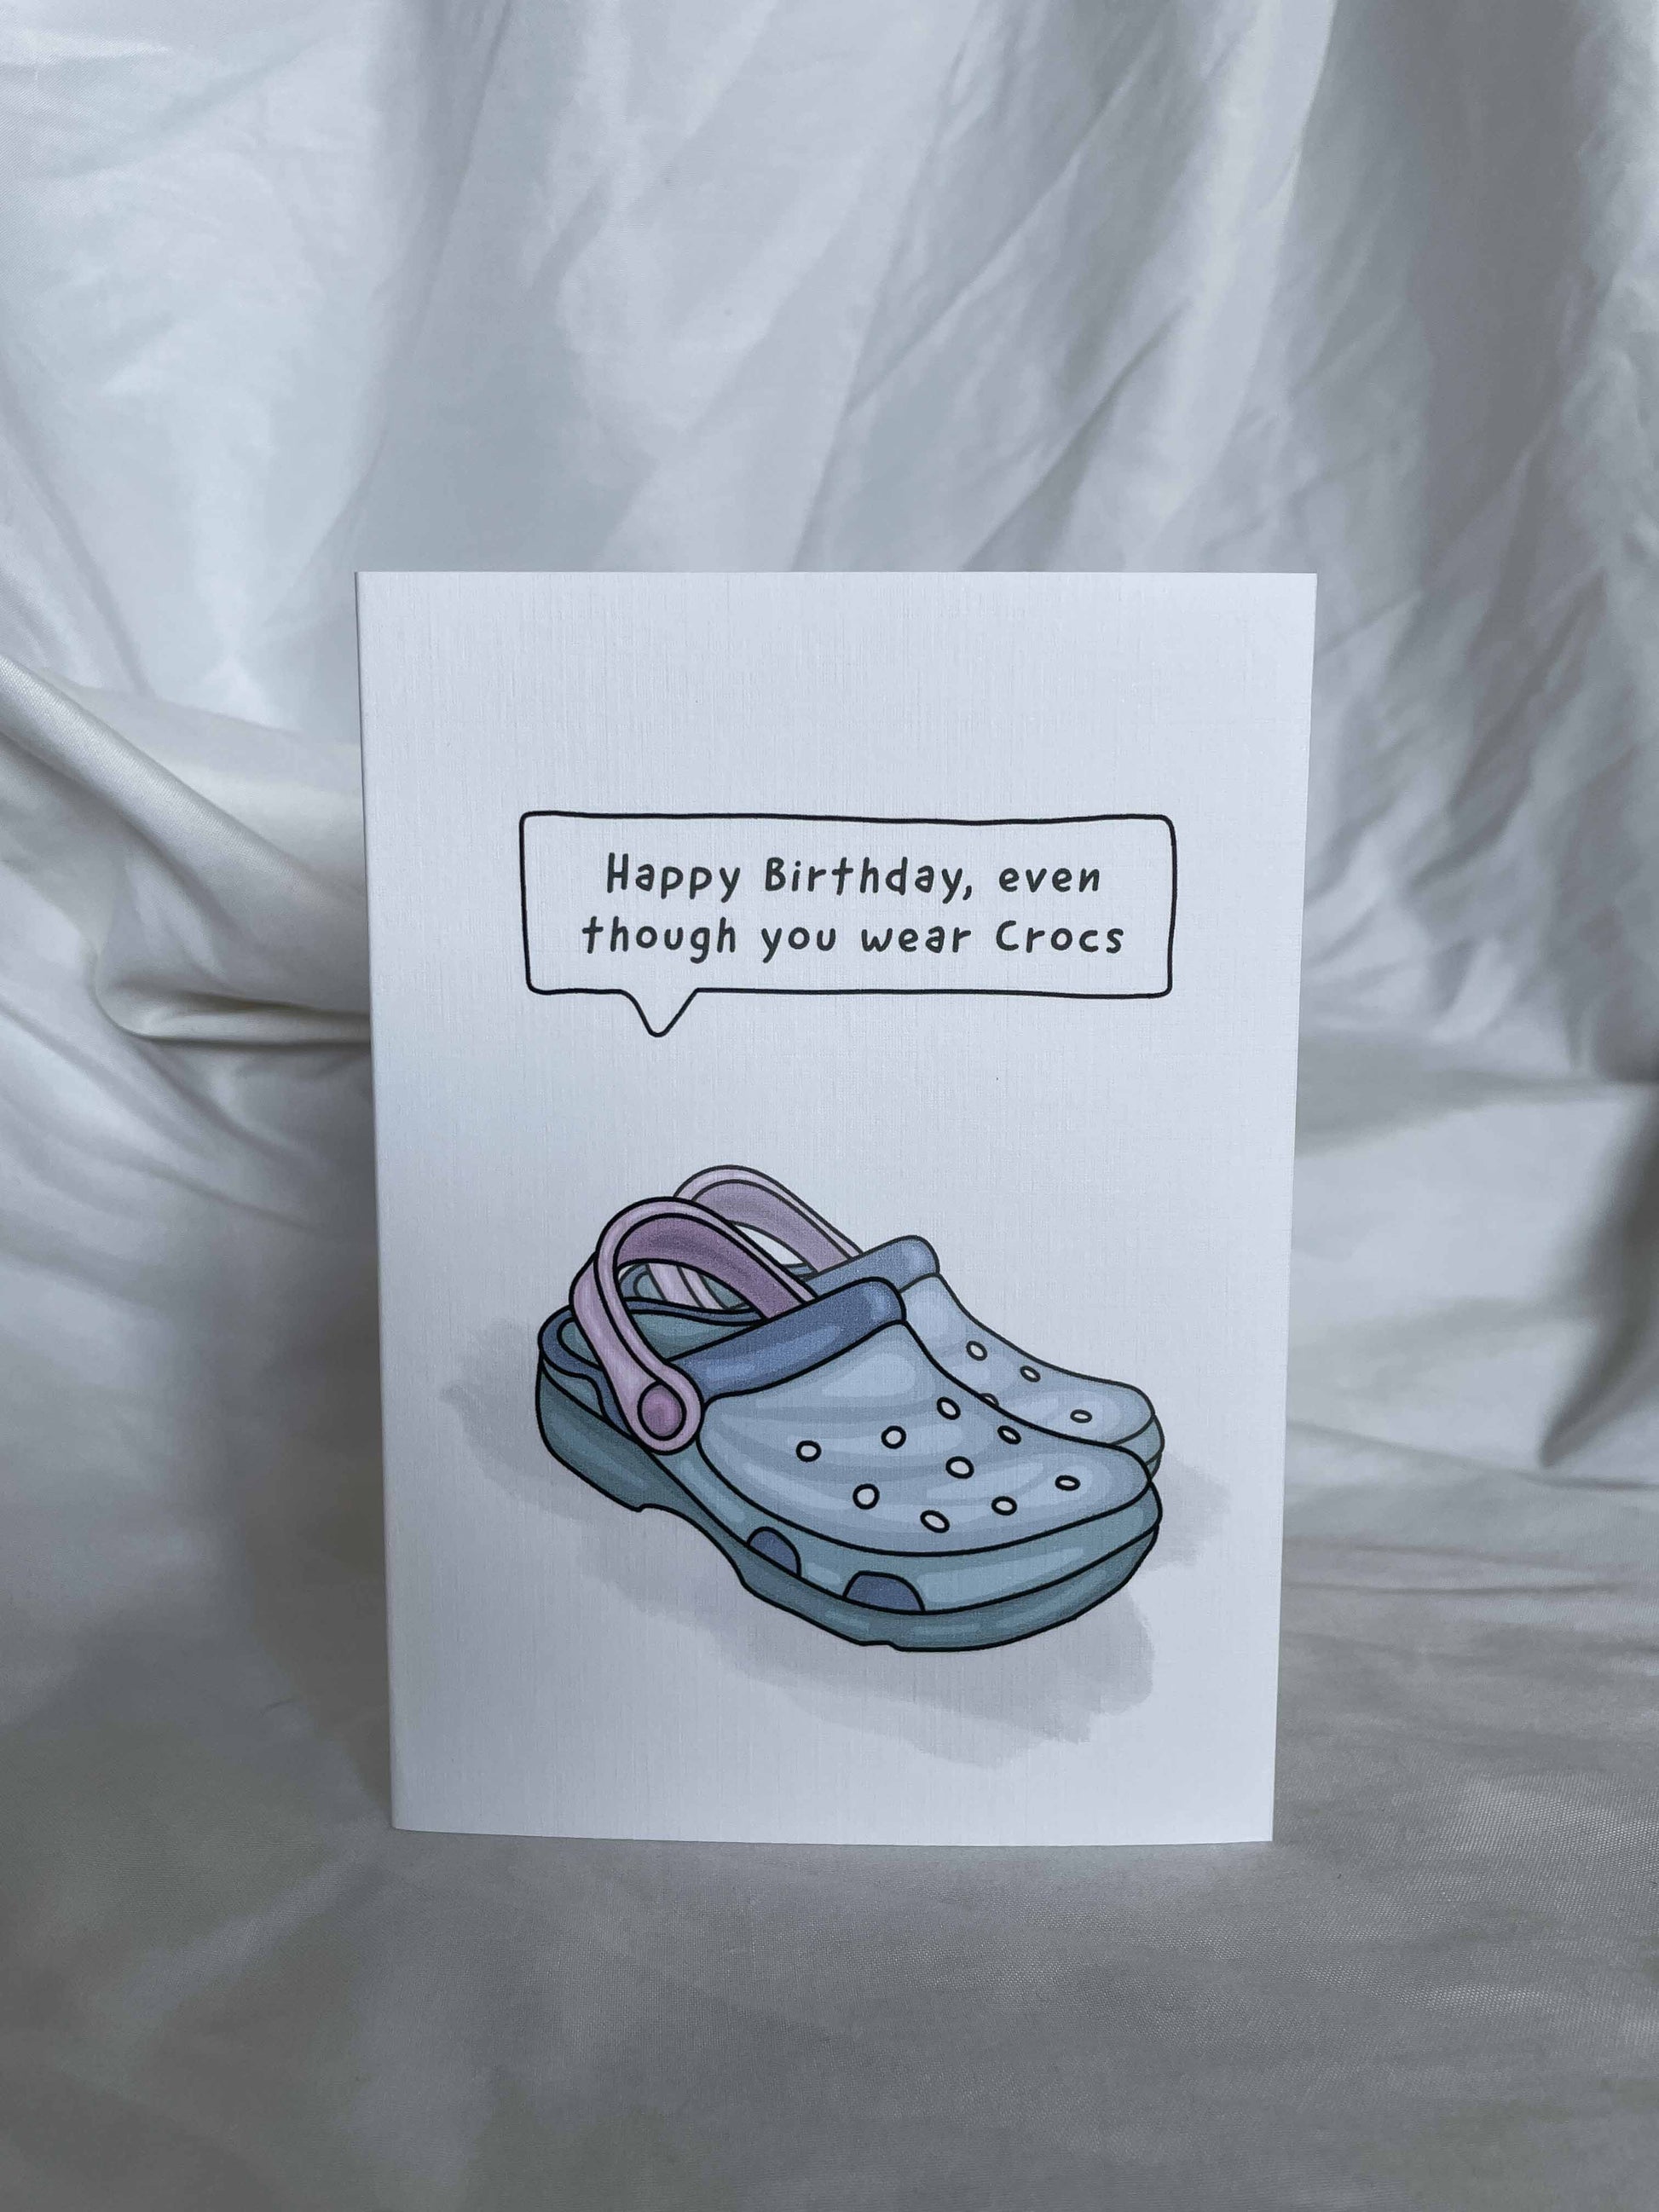 Birthday Card with Crocs Illustration | Fun Crocs-themed Greeting Card